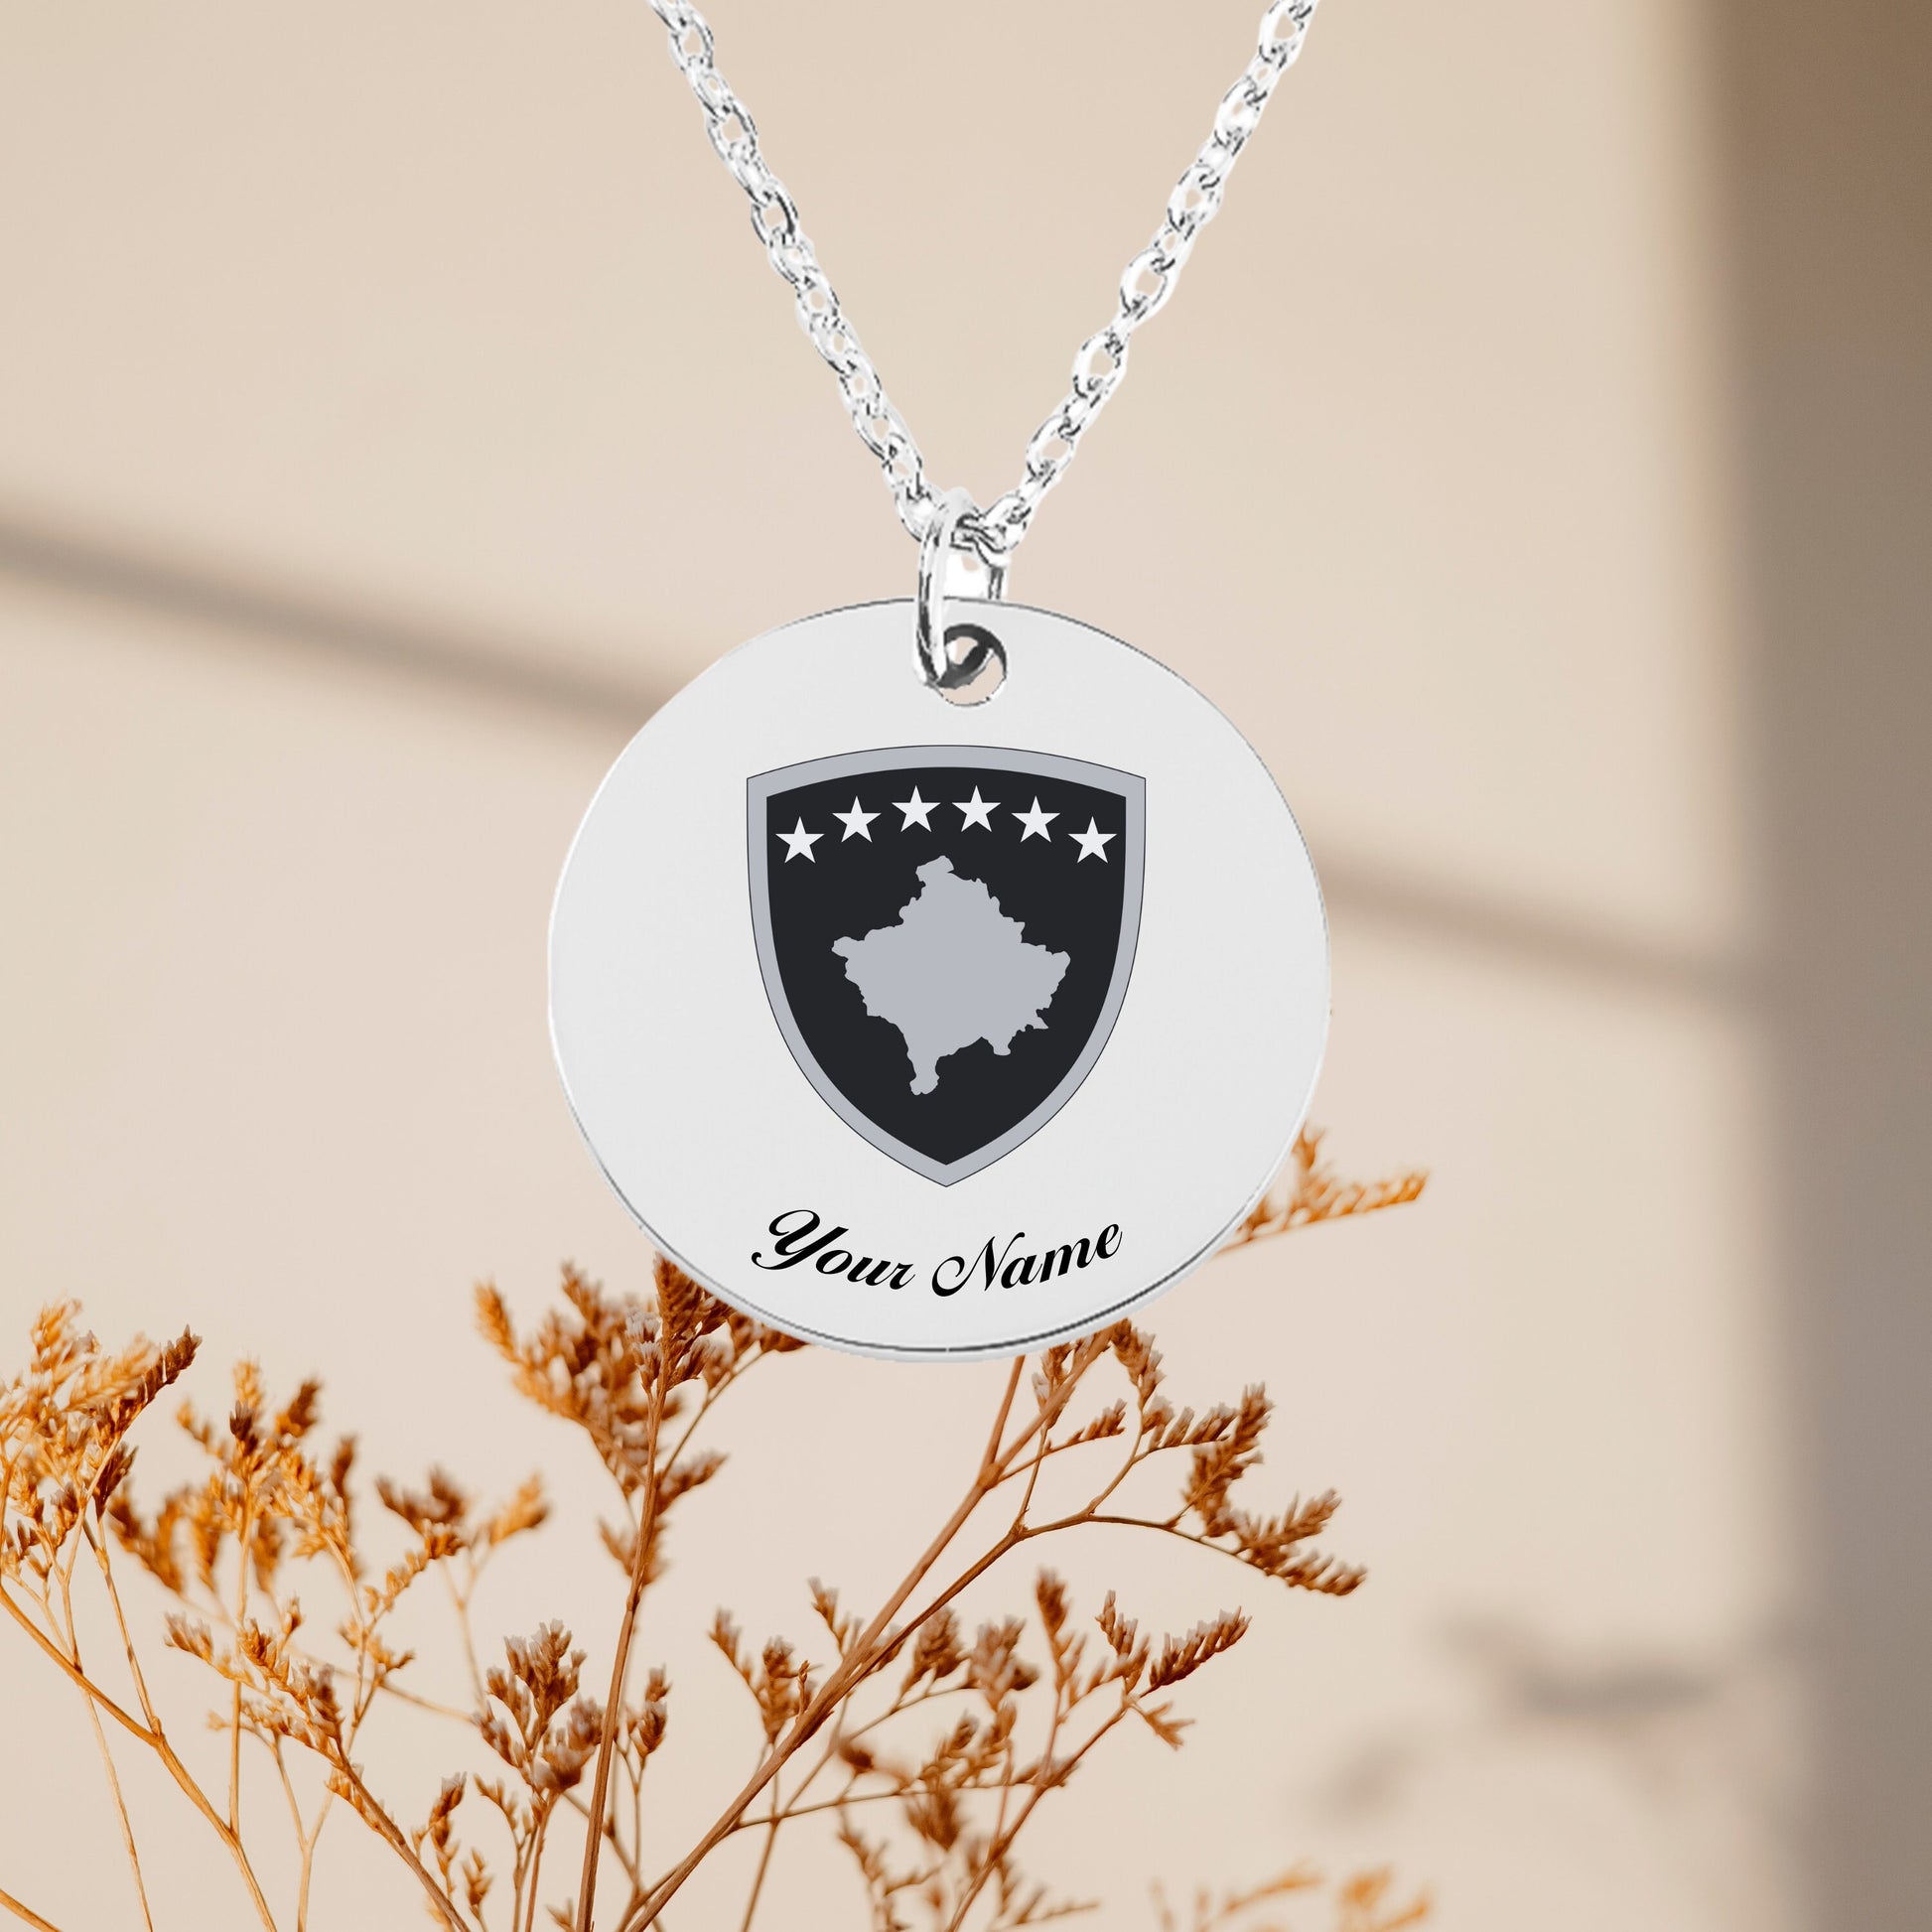 Kosovo National Emblem Necklace - Personalizable Jewelry